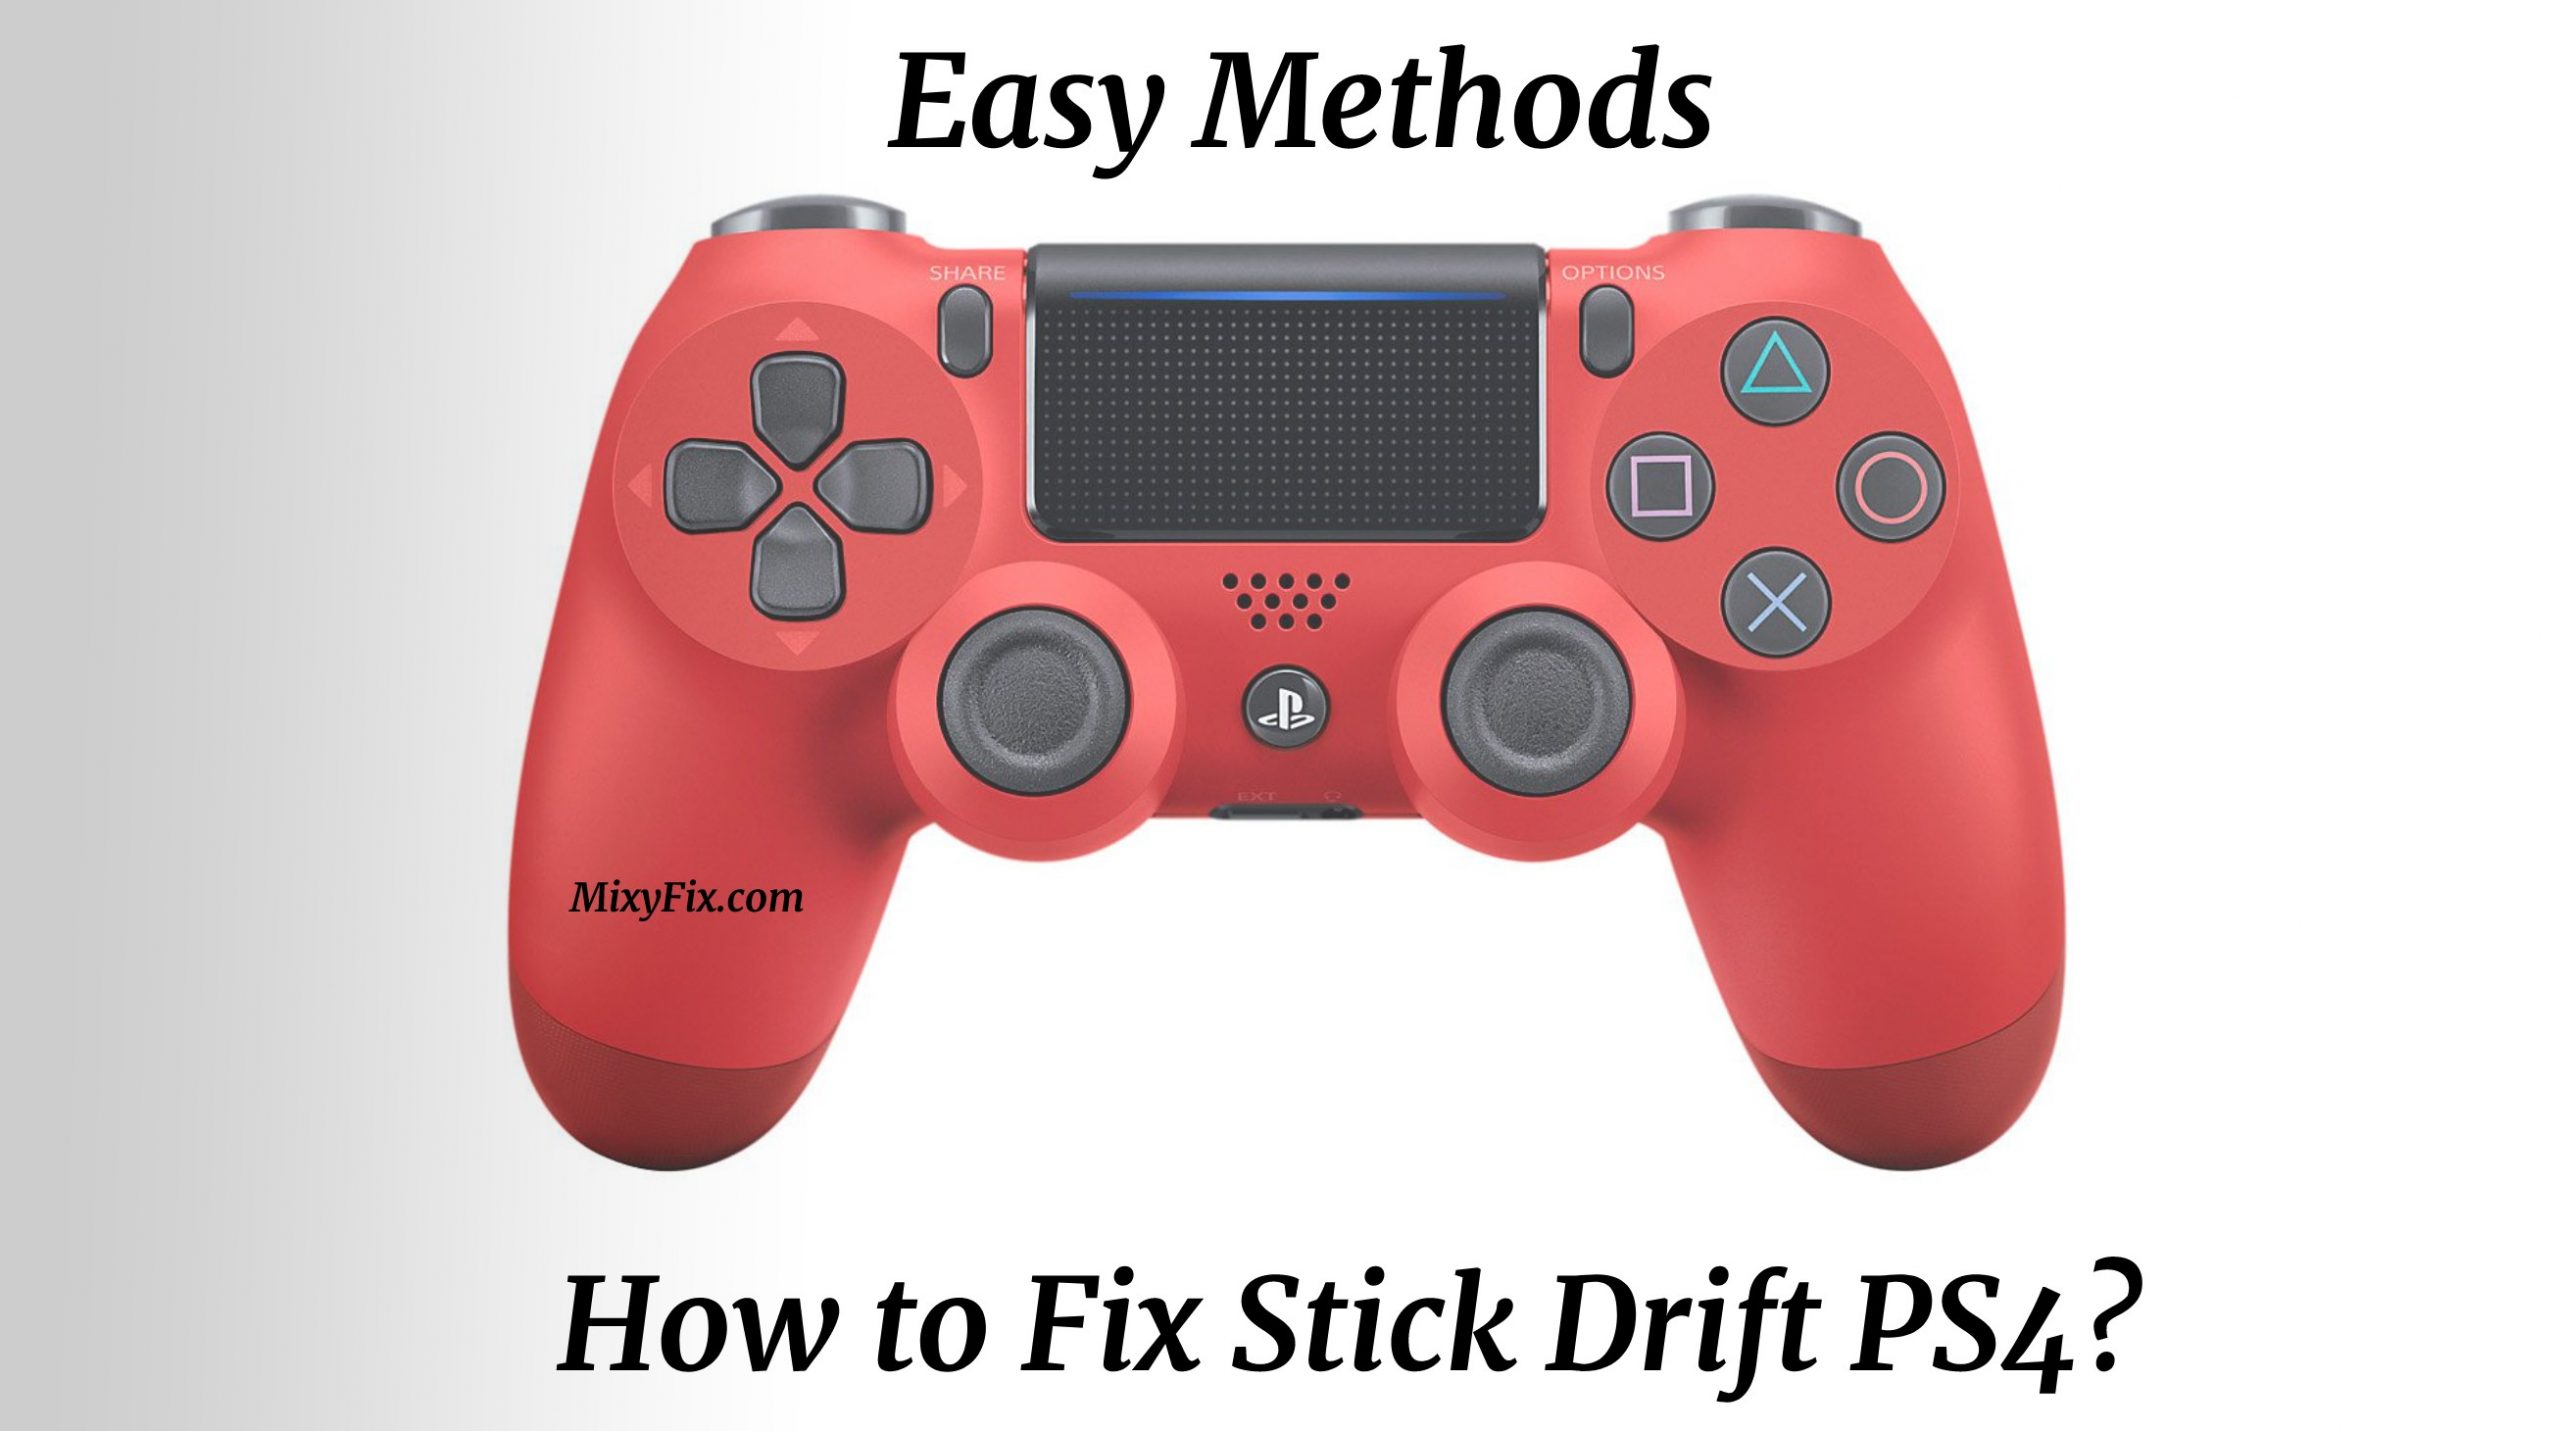 How to Fix Stick Drift PS4